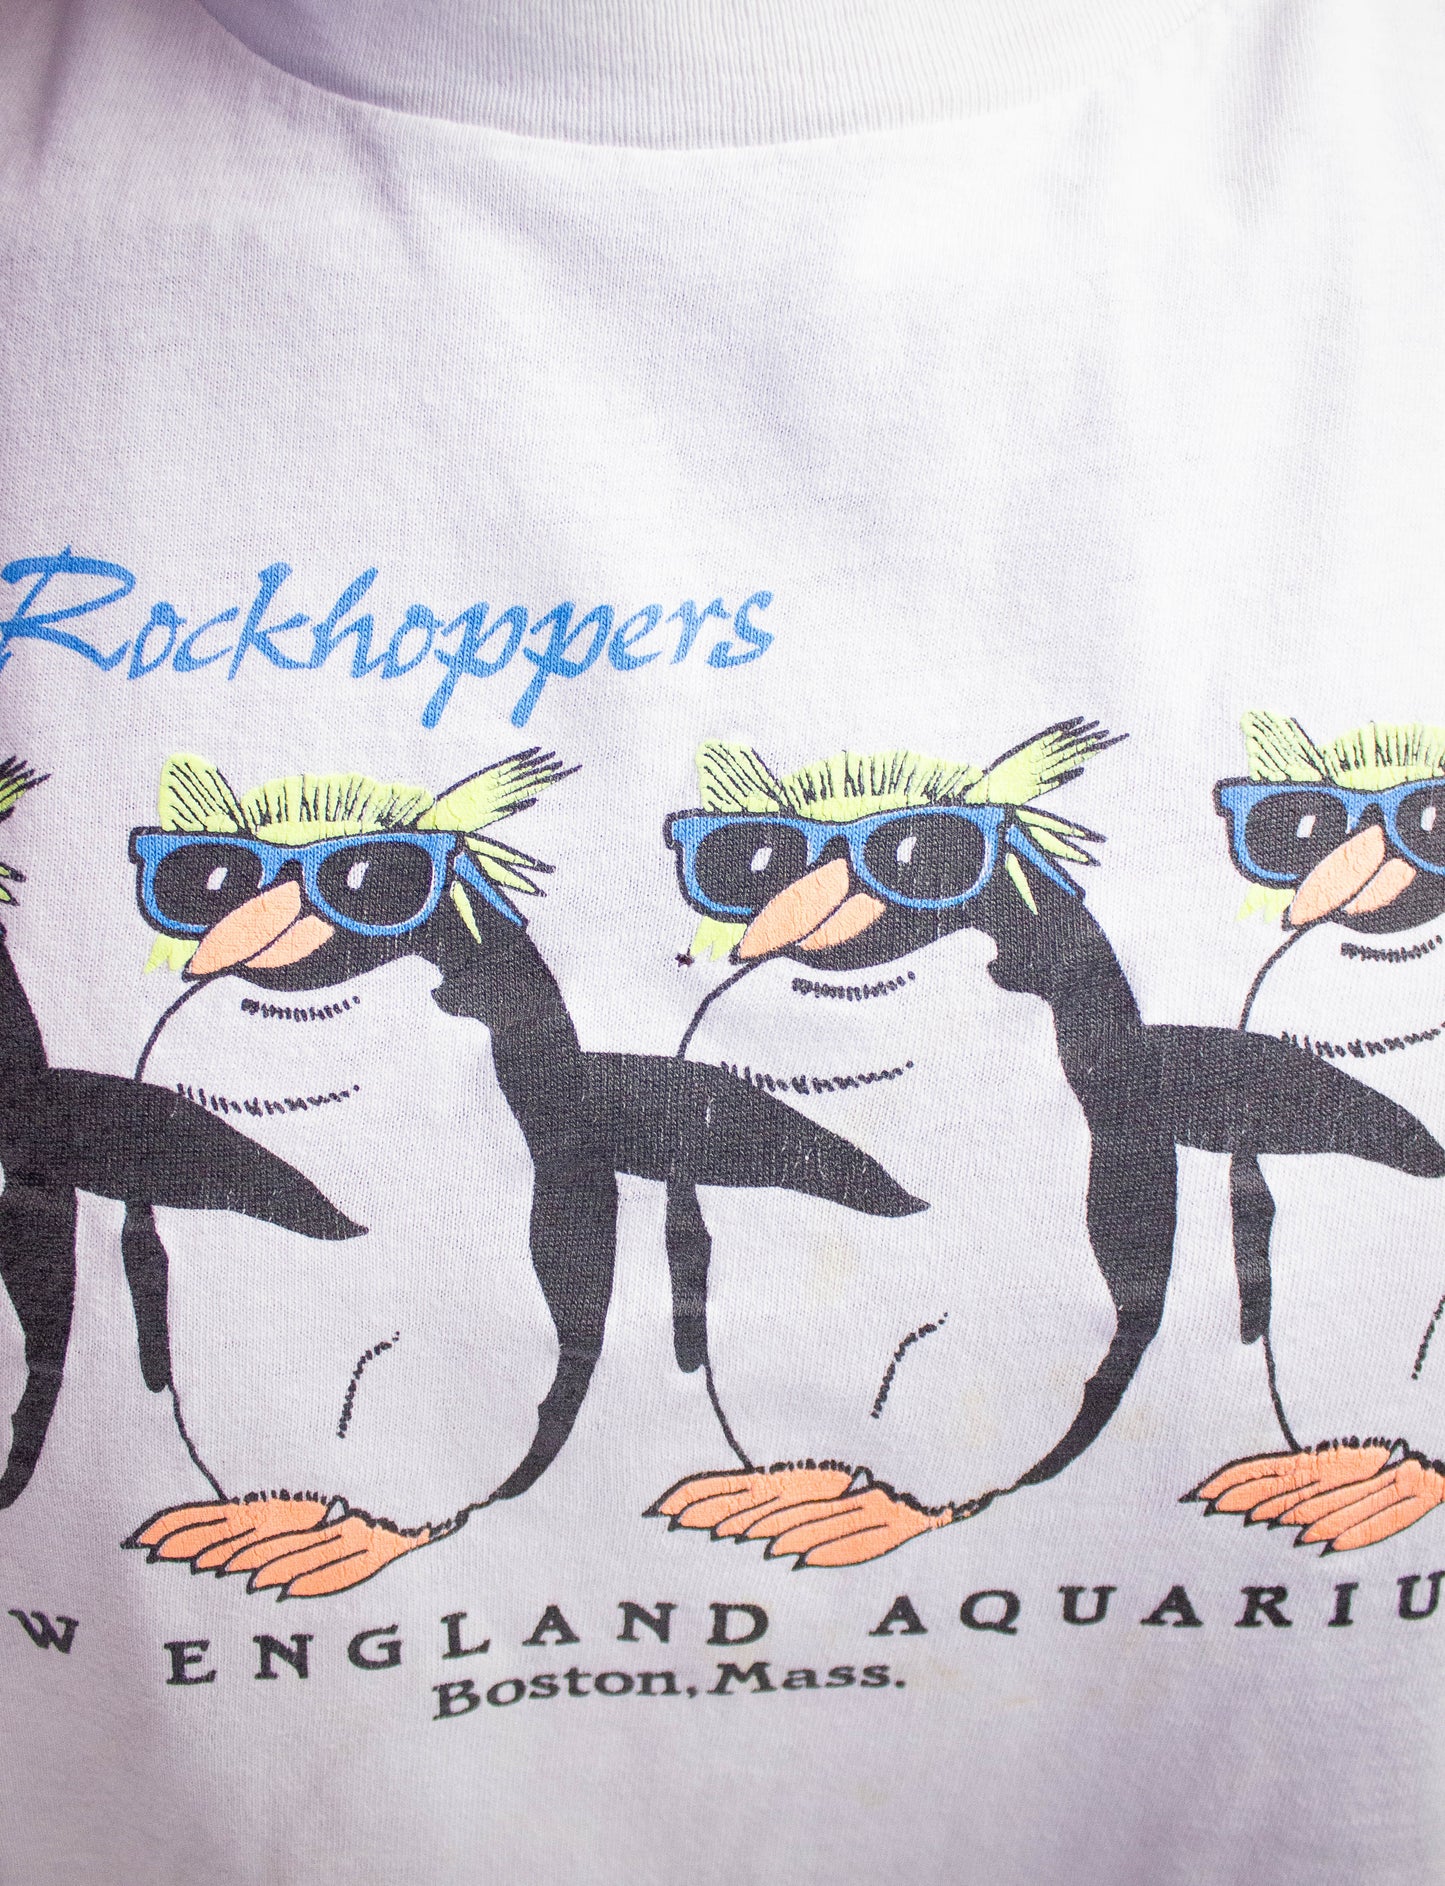 Vintage The Rockhoppers New England Aquarium Graphic T-Shirt XL